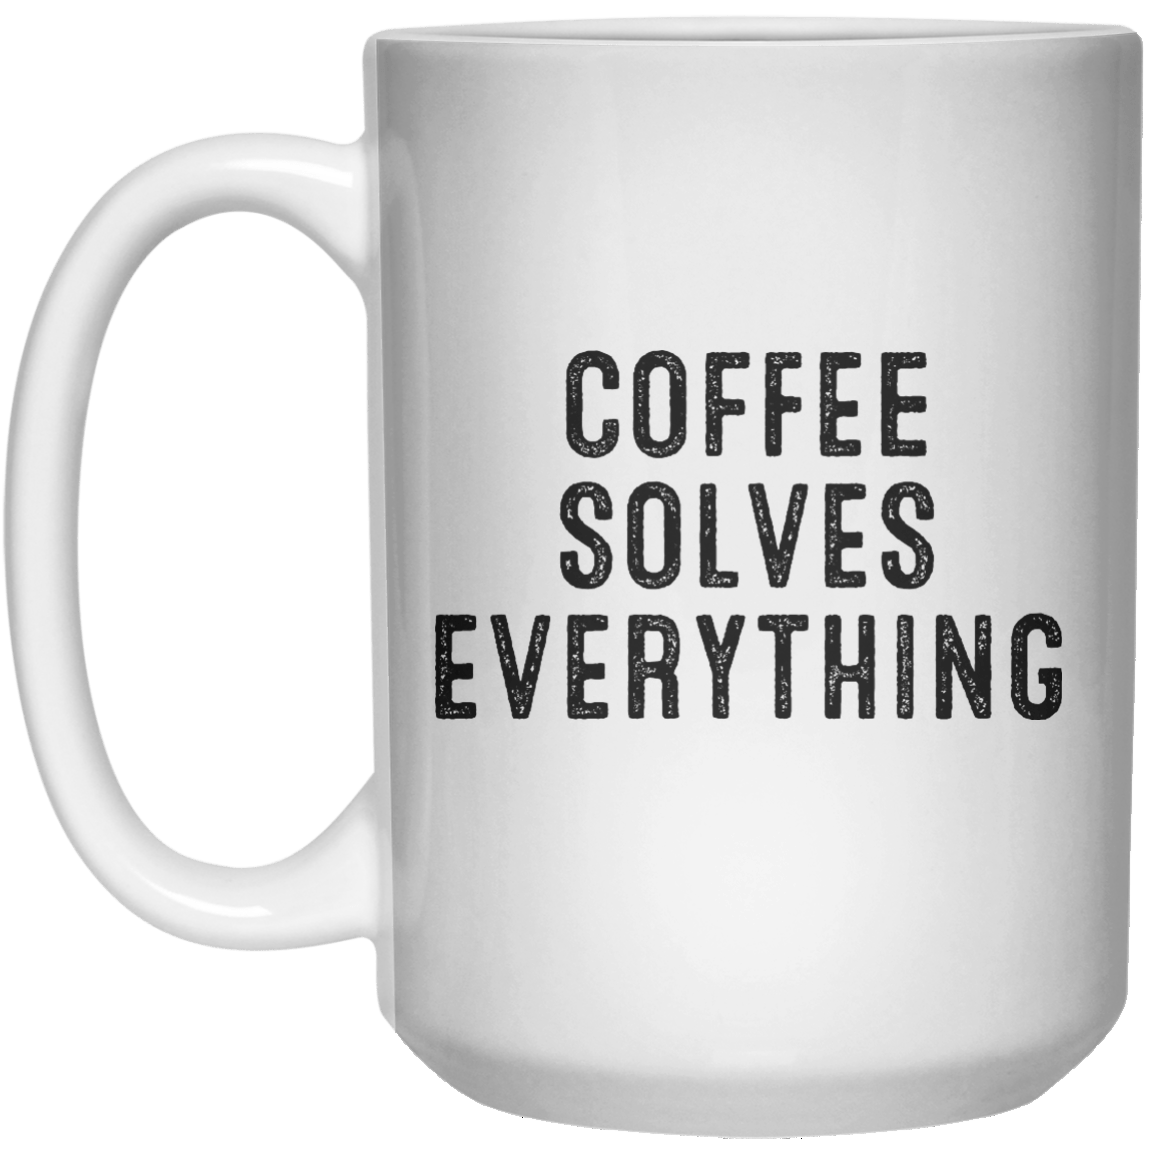 Coffee Solves Everything MUG  Mug - 15oz - Shirtoopia